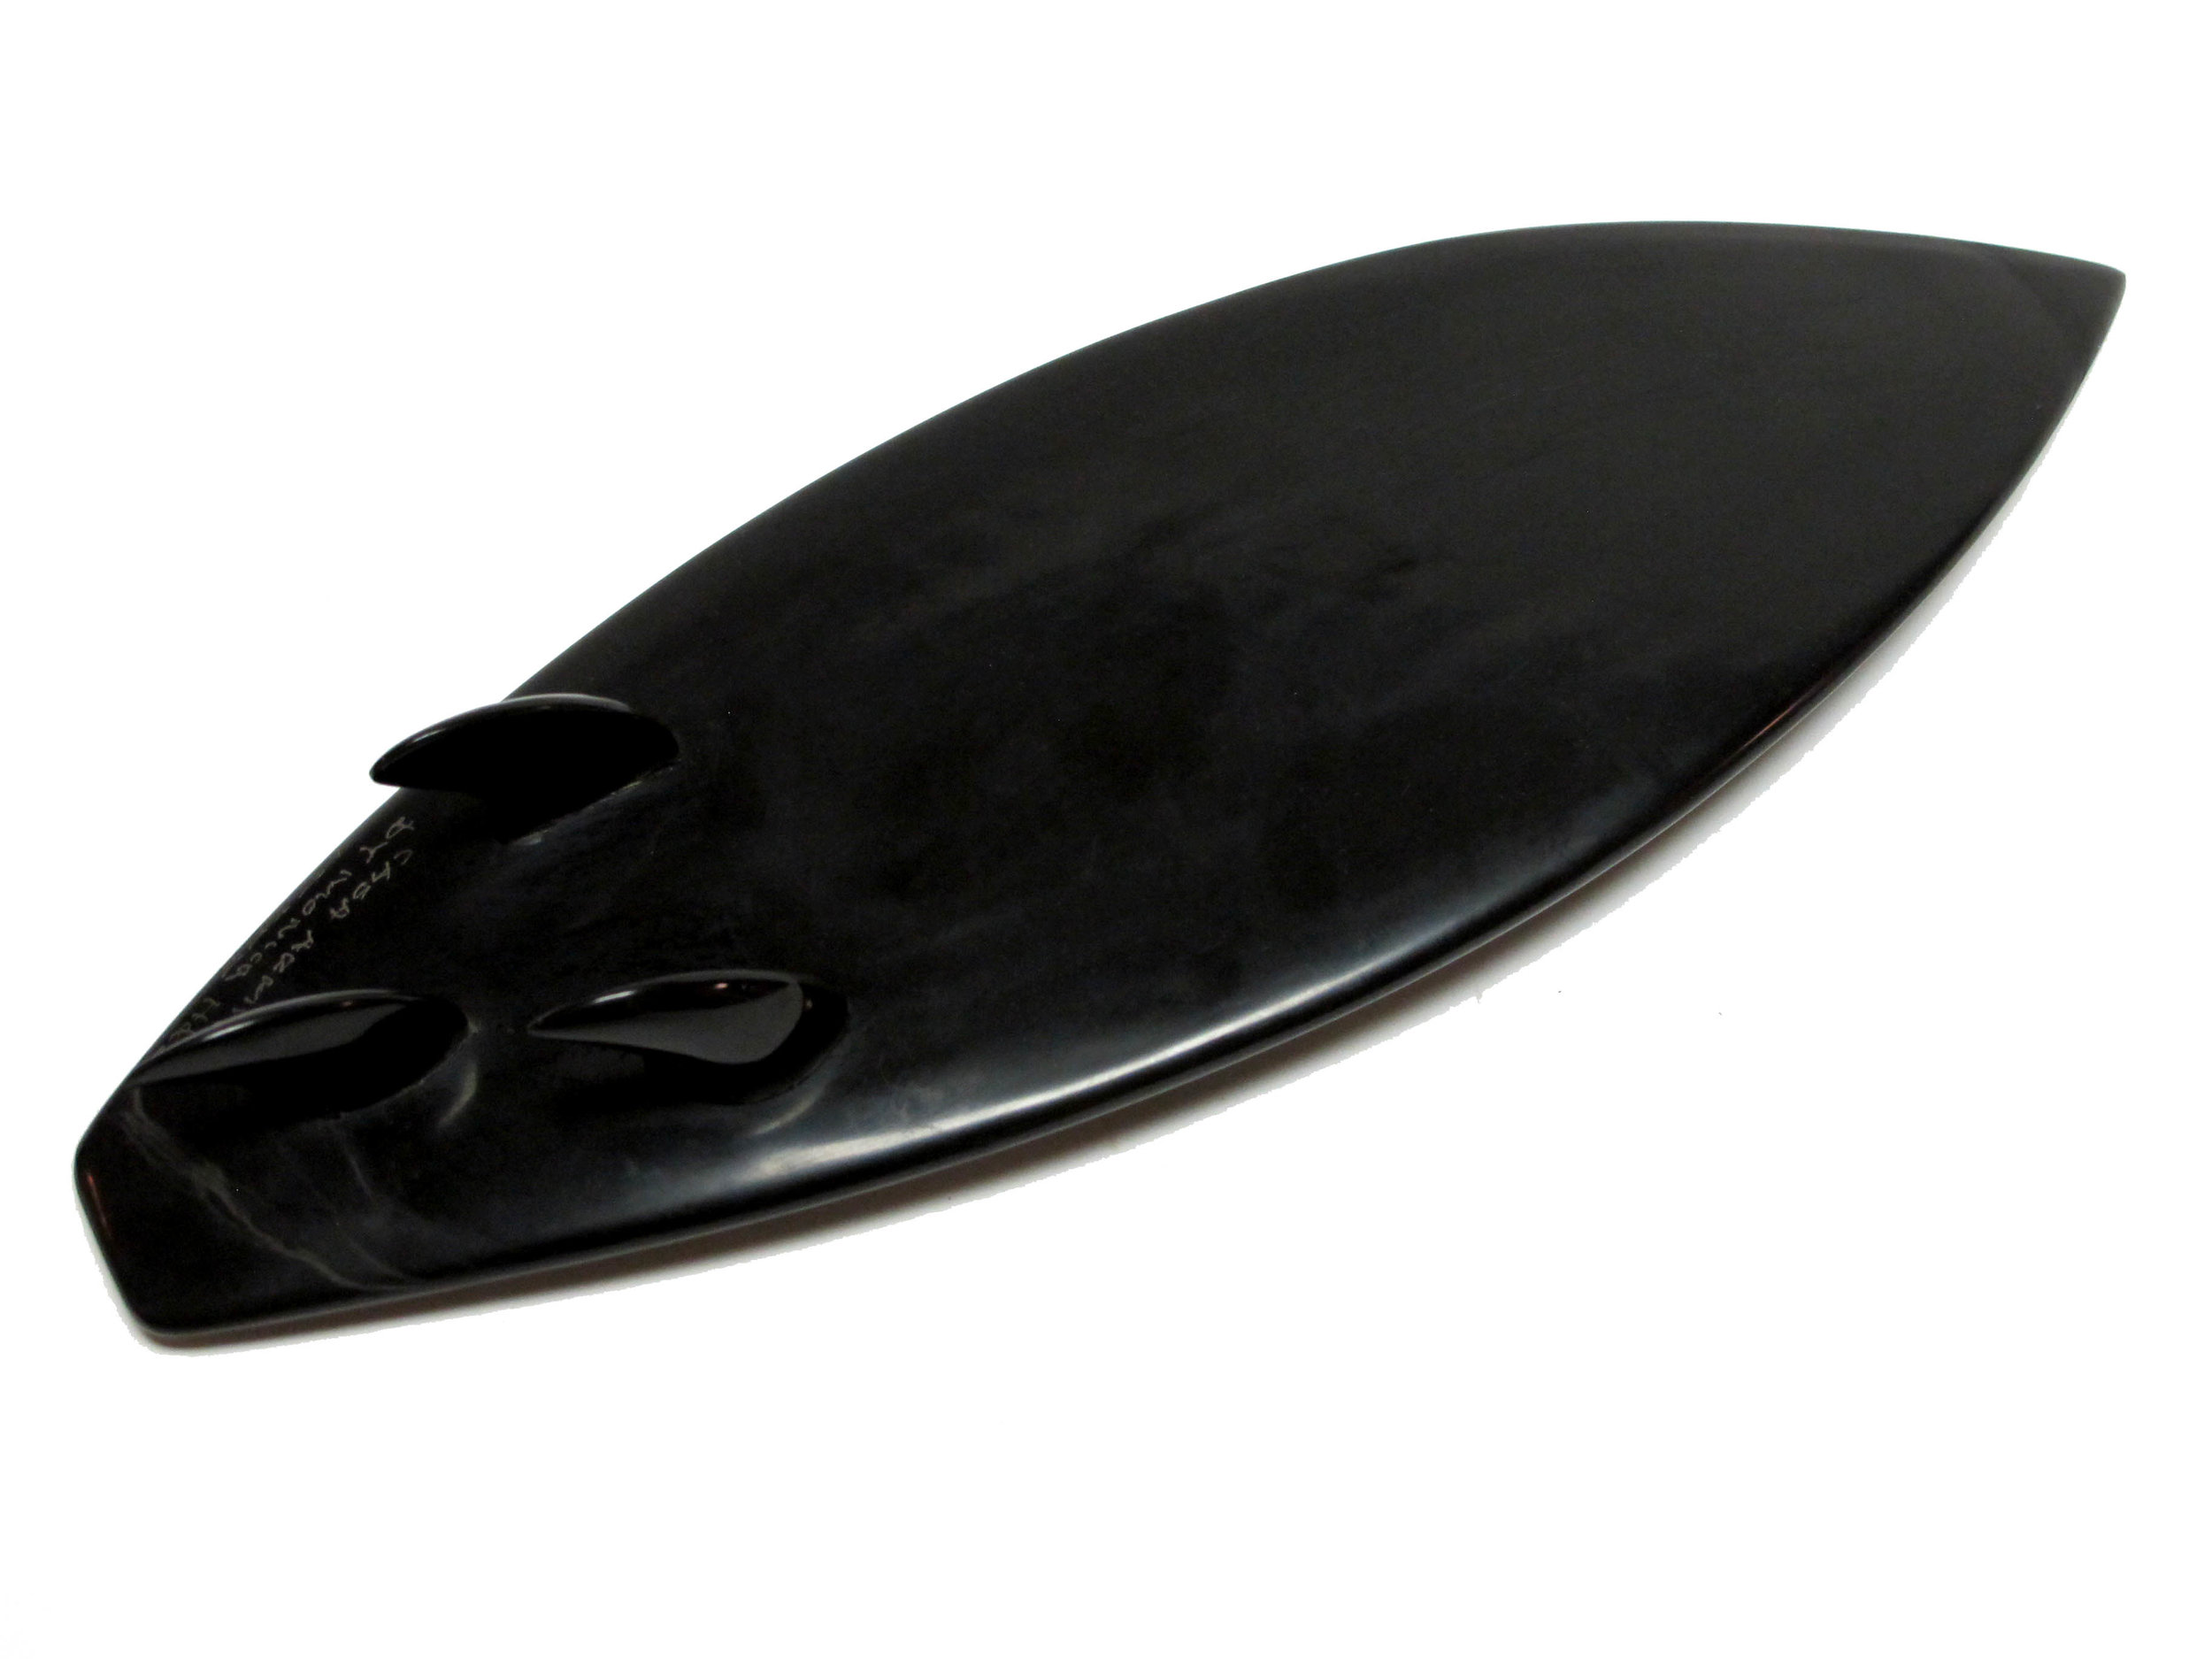 KL_Surfboard Small_black marble5.jpg